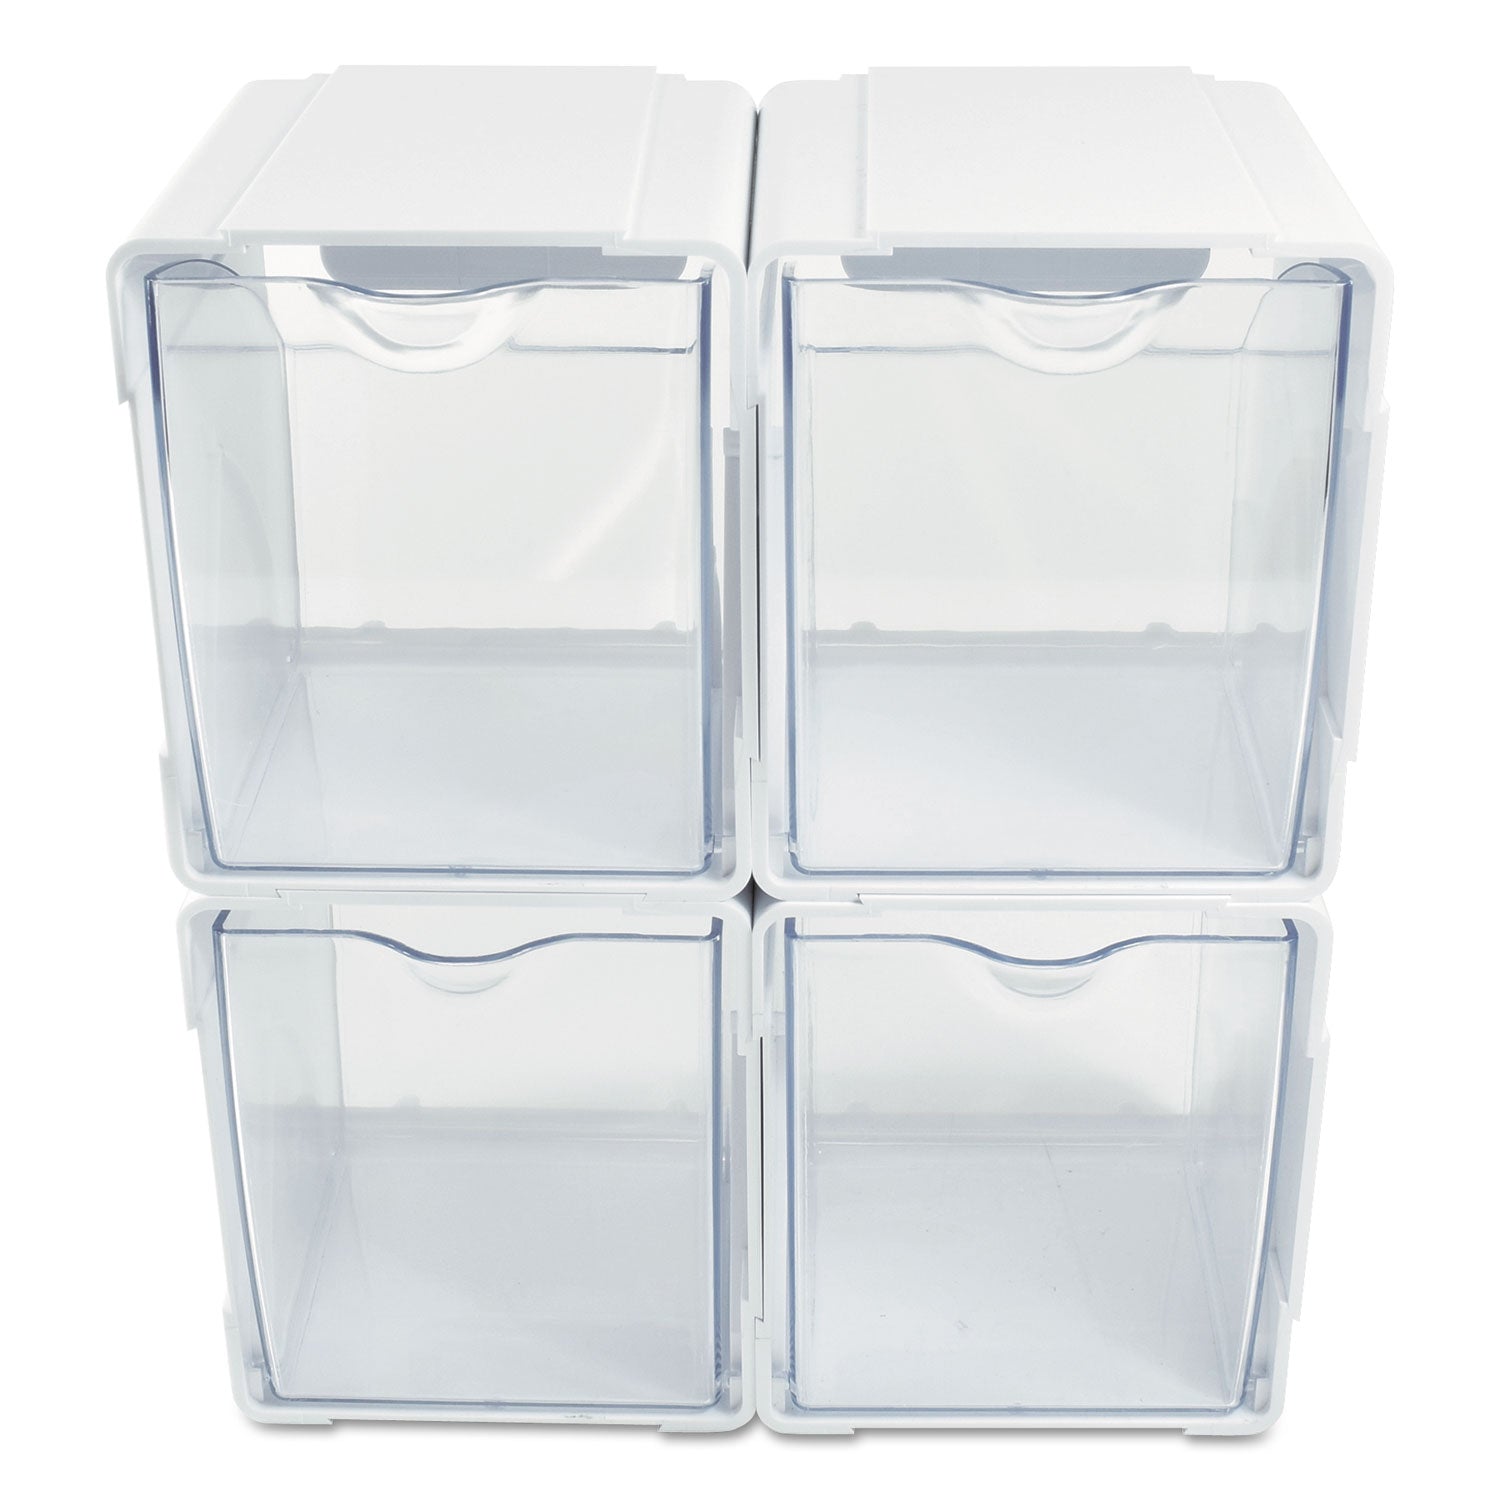 Tilt Bin Interlocking 4-Bin Organizer, Plastic, 4.63 x 4.88 x 5.5, White/Clear - 